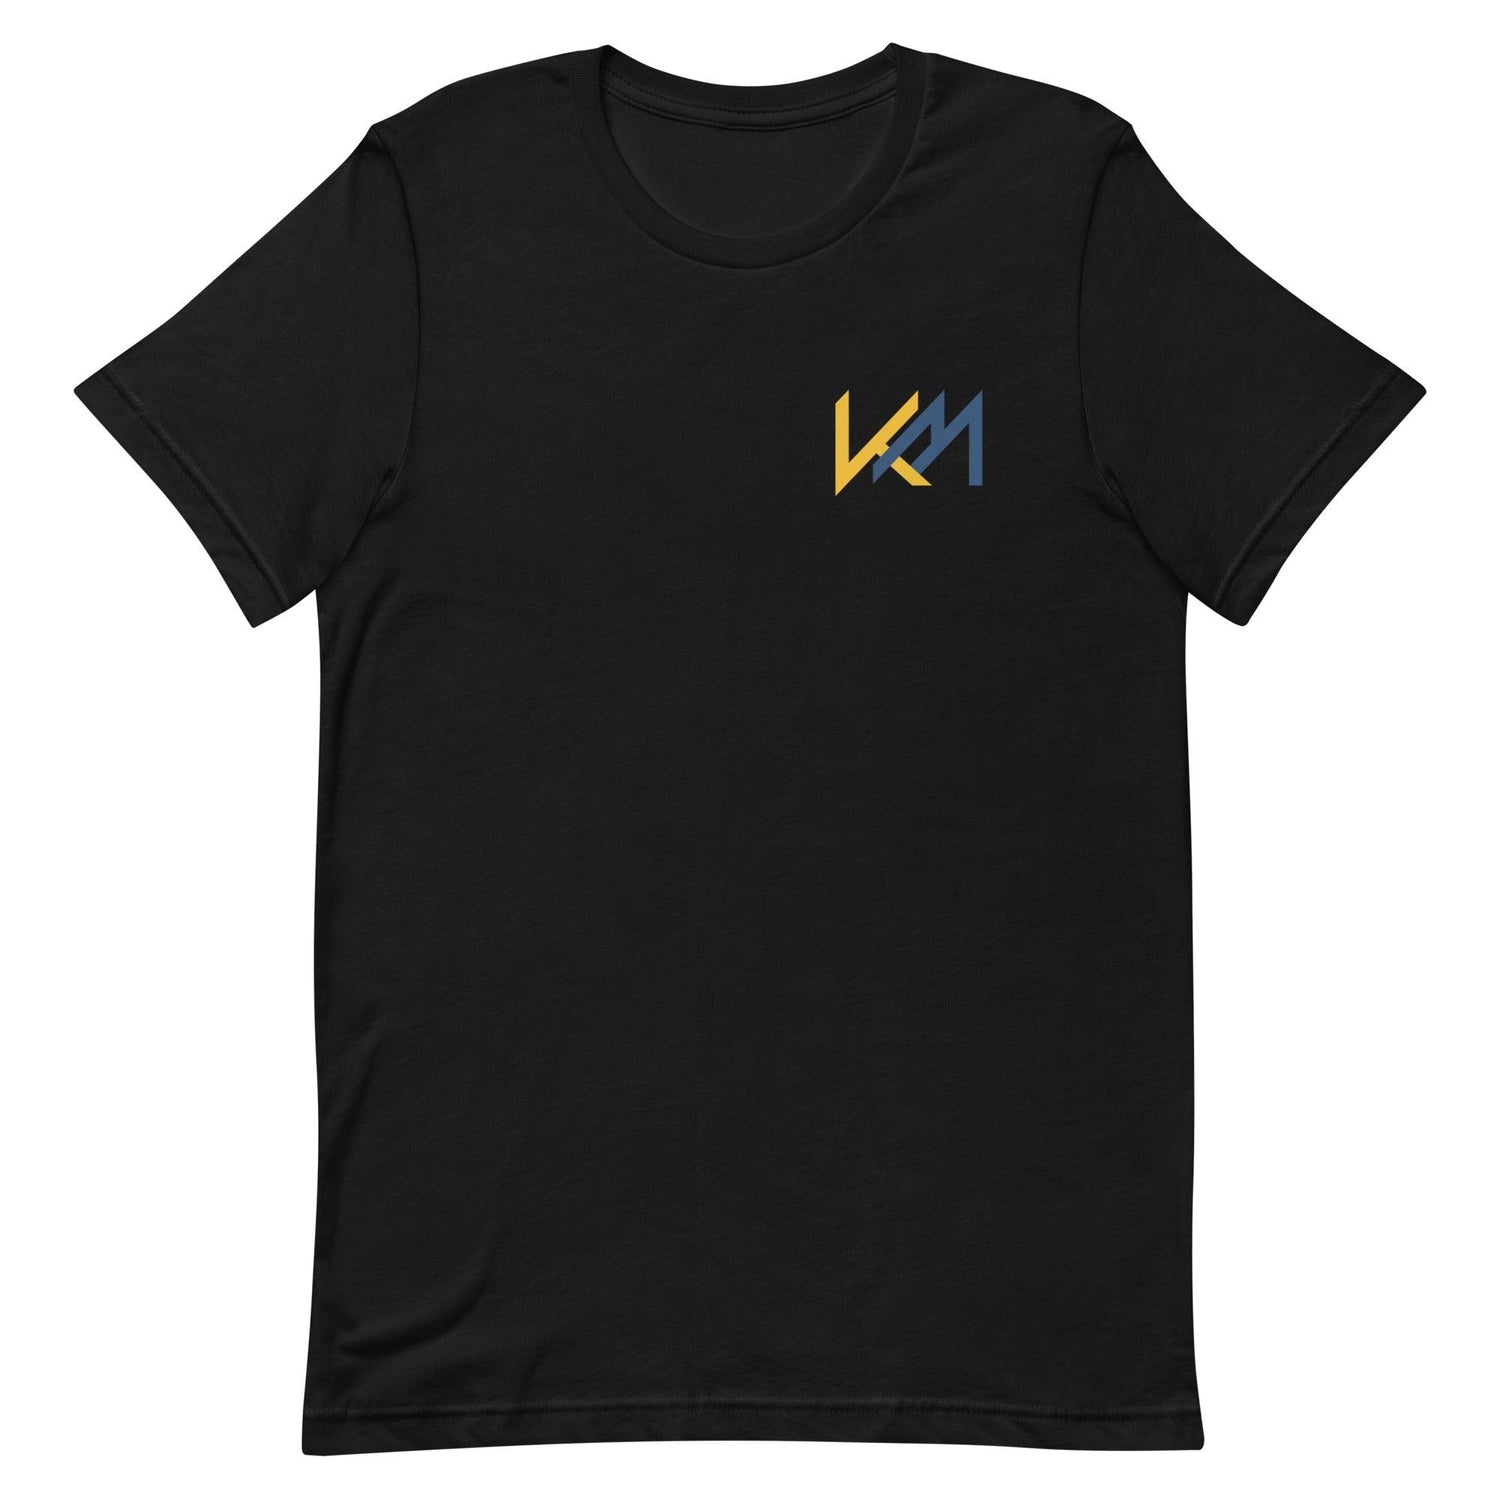 Kerry Martin "Essential" t-shirt - Fan Arch